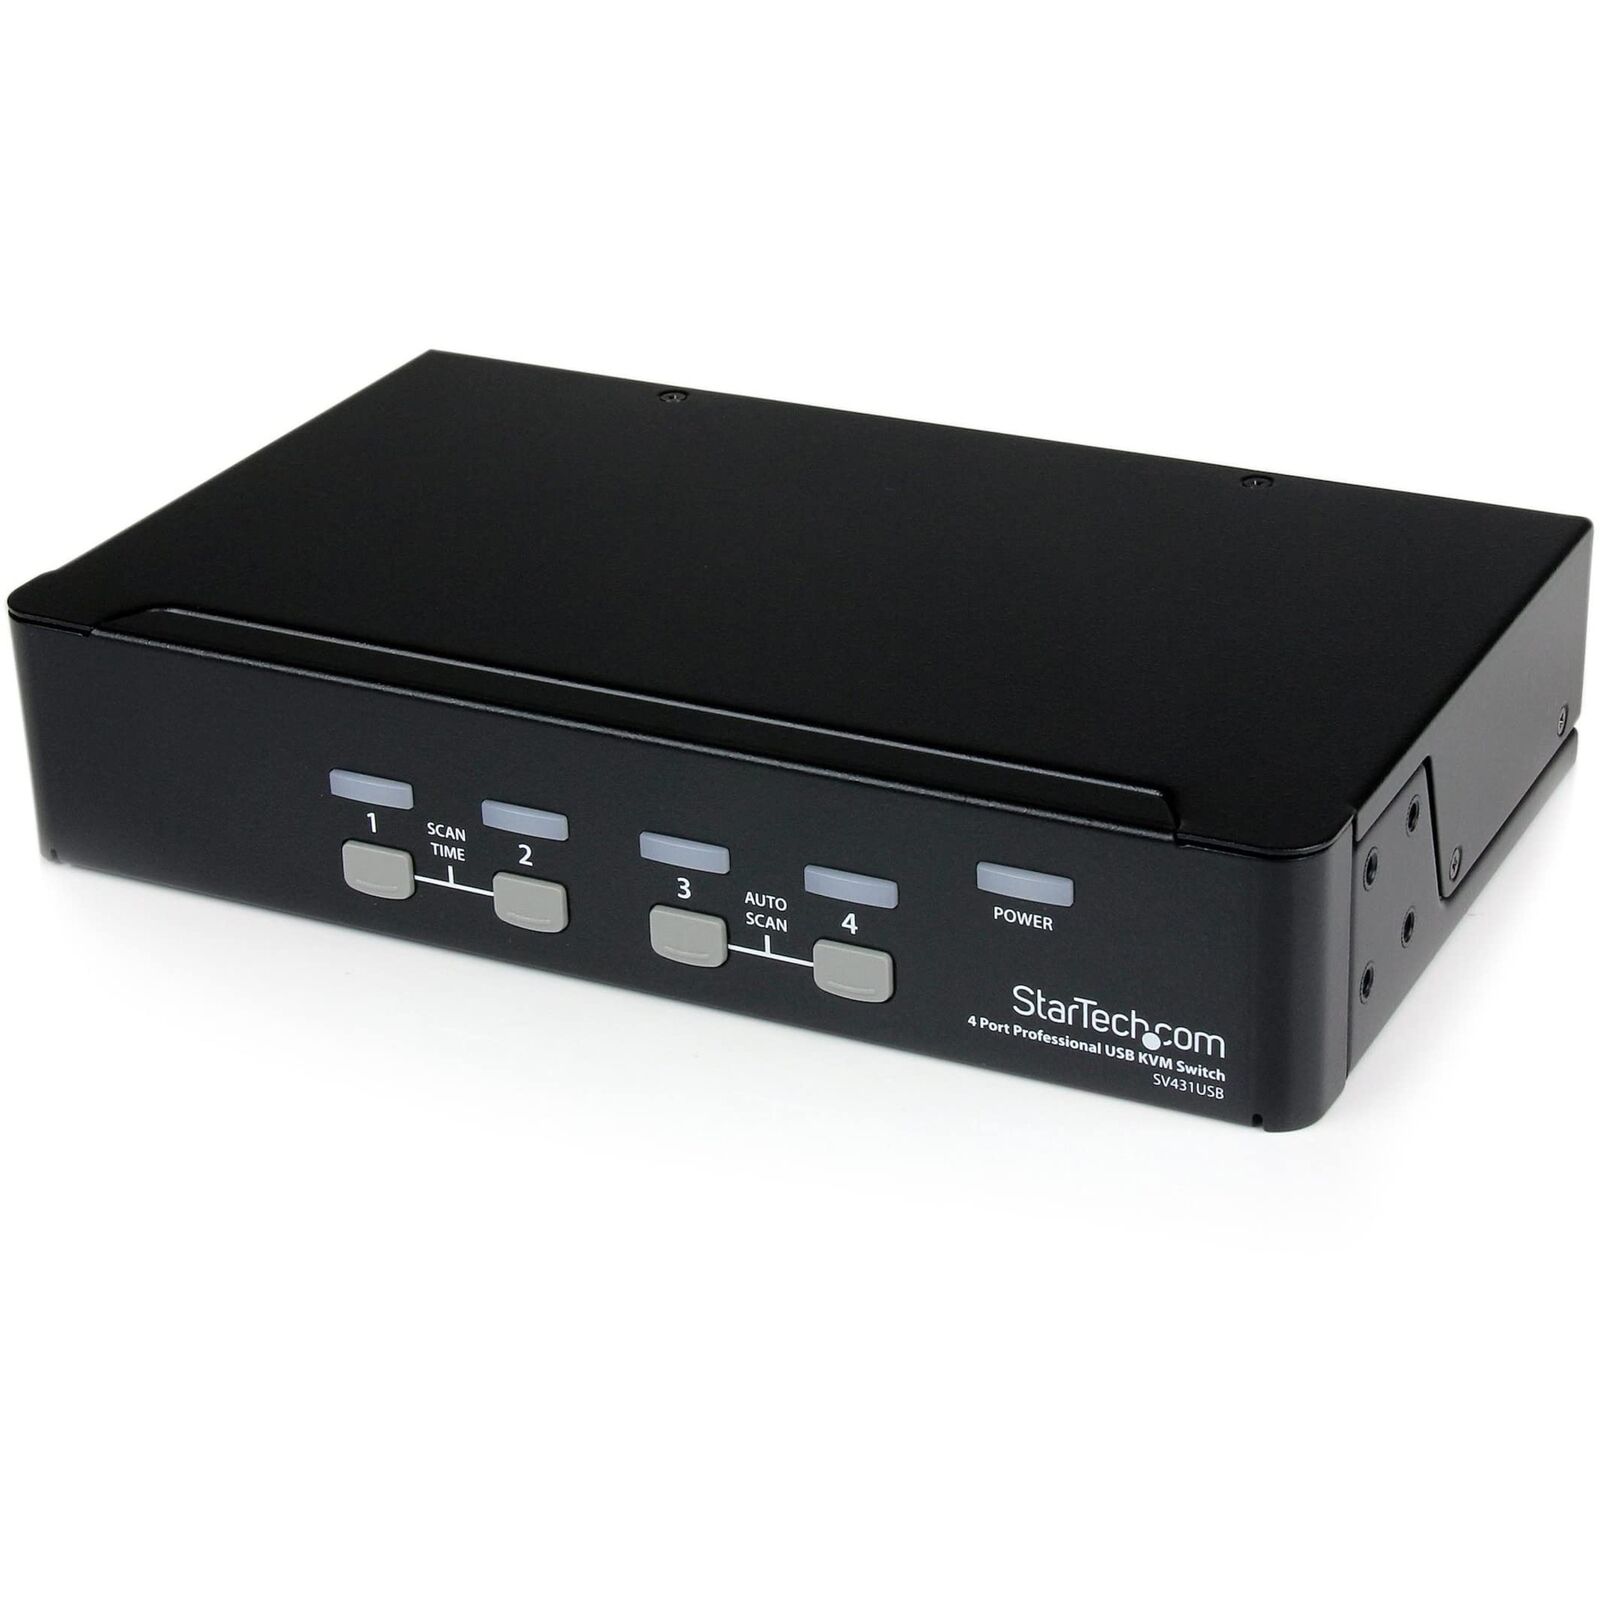 StarTech.com 4 Port Professional VGA USB KVM Switch with Hub 1U Rack (SV431USB)